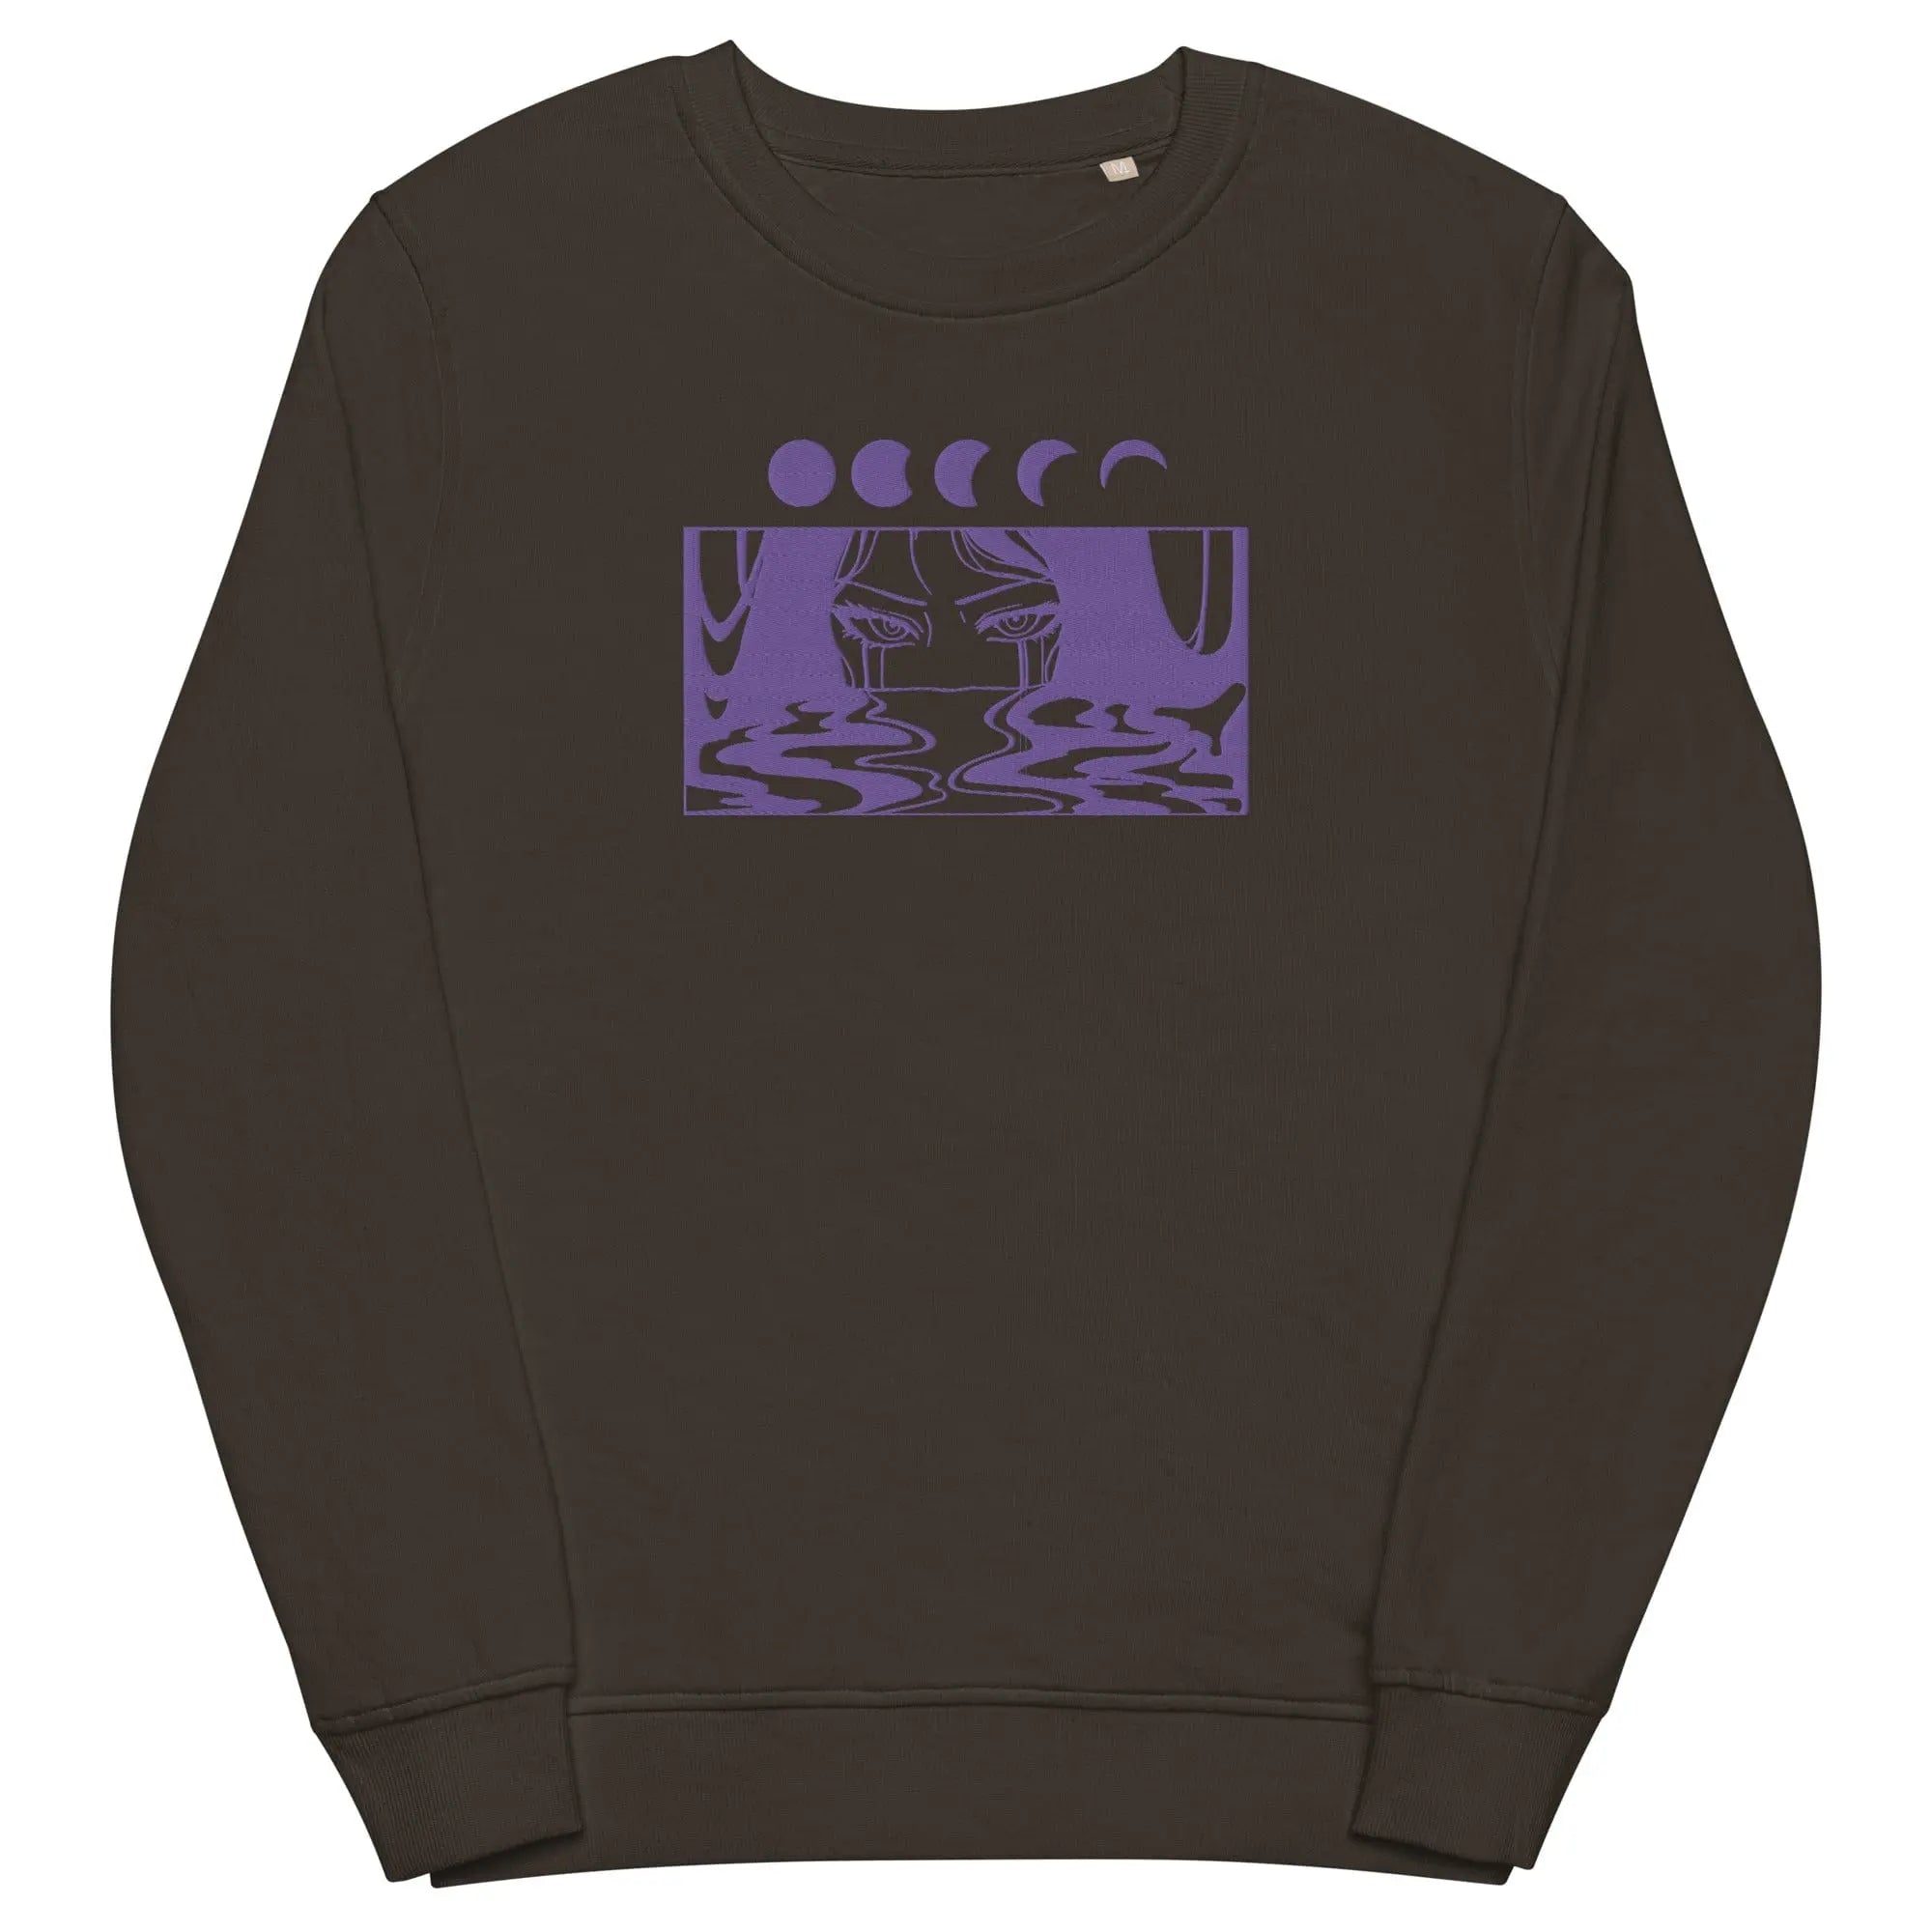 unisex-organic-sweatshirt-deep-charcoal-grey-front-653462f7e09d3.jpg